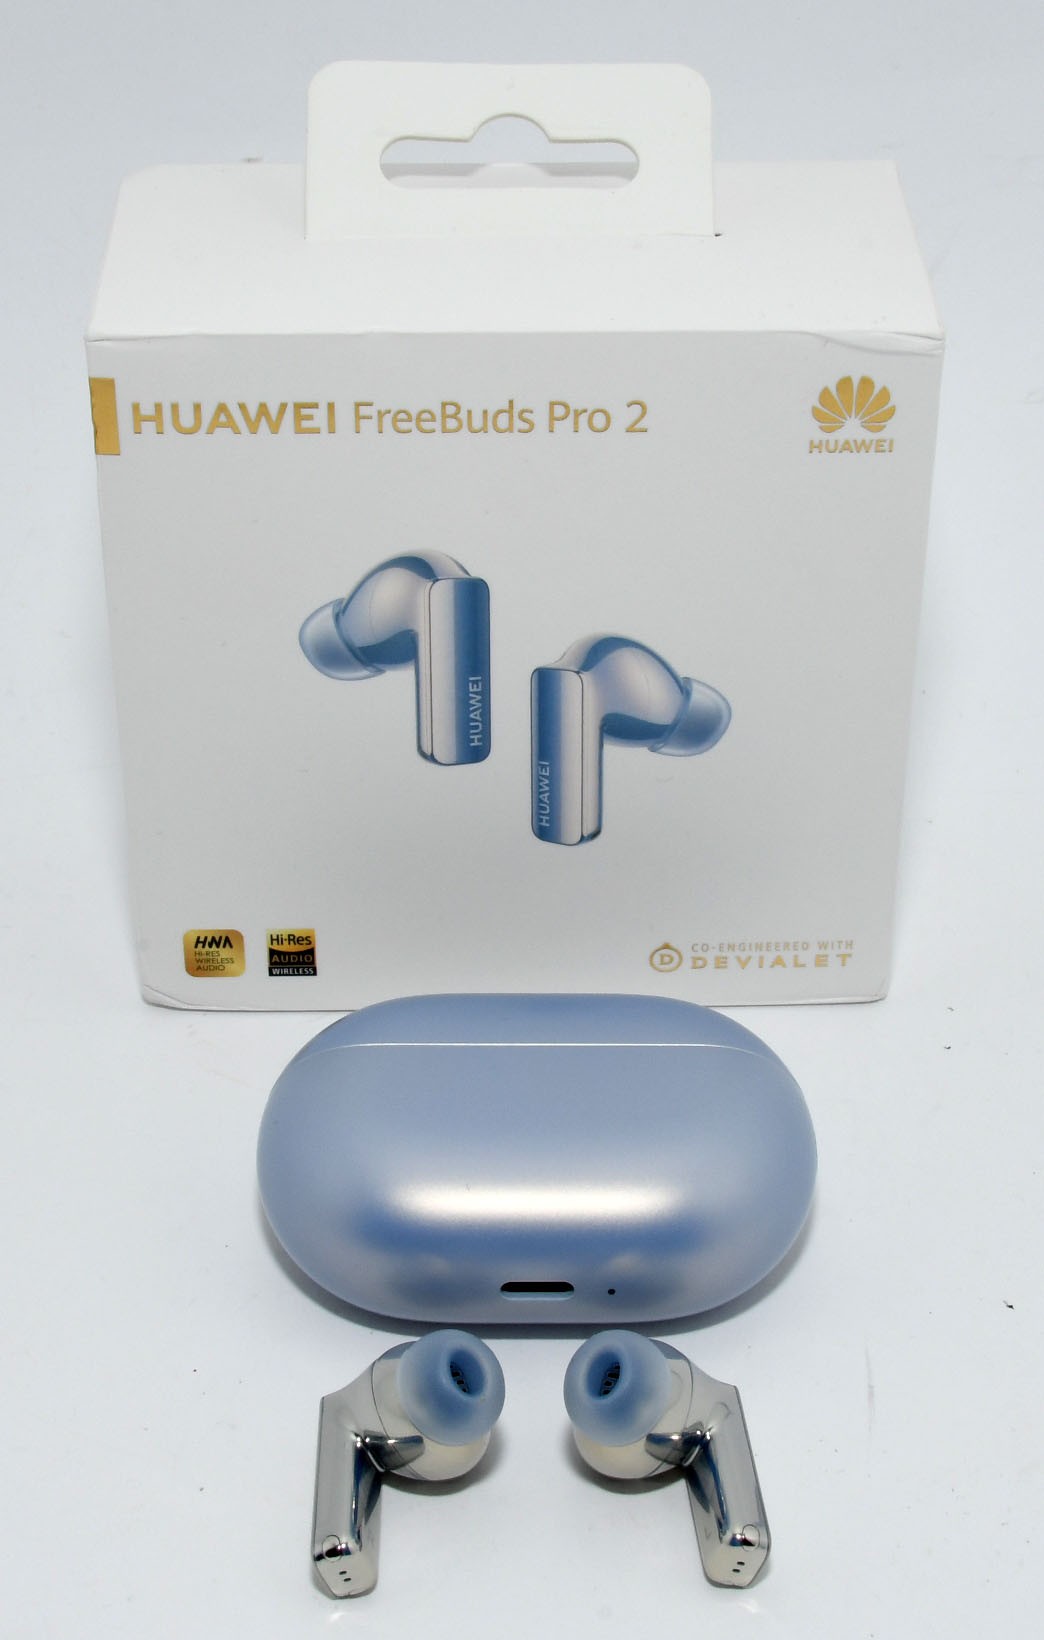  HUAWEI FreeBuds Pro 2 - Altavoz dual con sonido